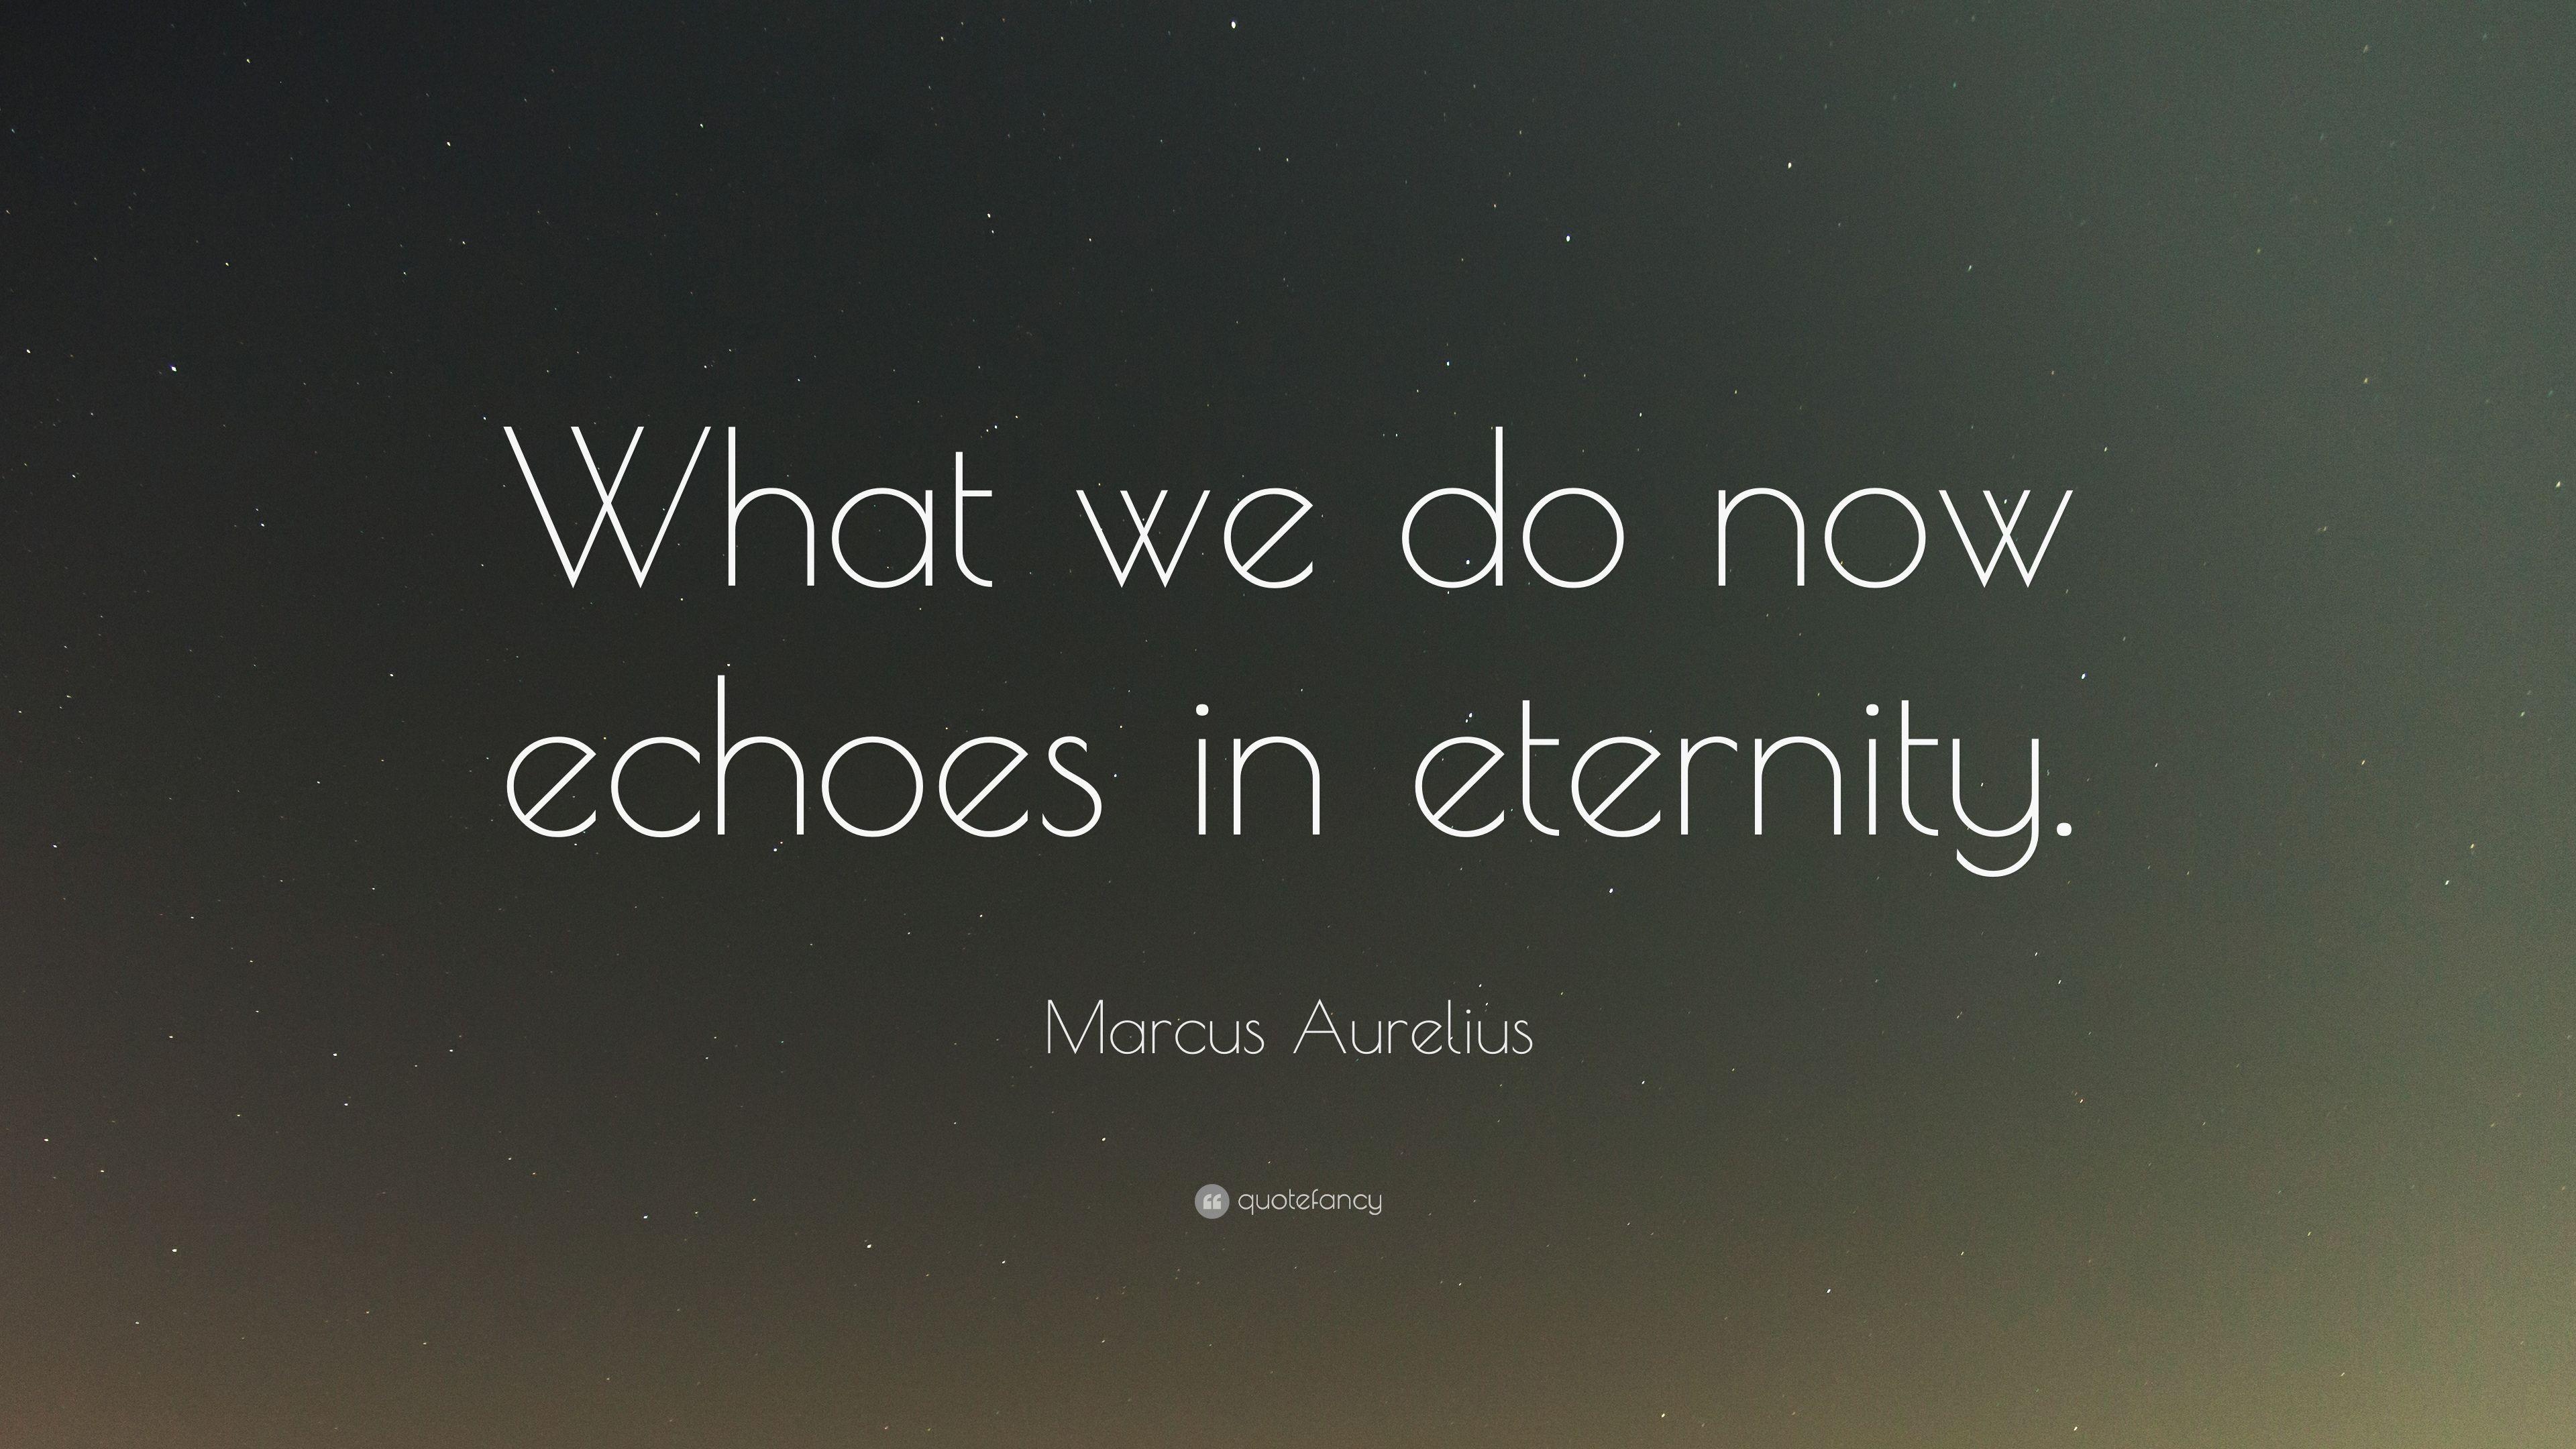 Marcus Aurelius Quote: “What we do now echoes in eternity.” 19